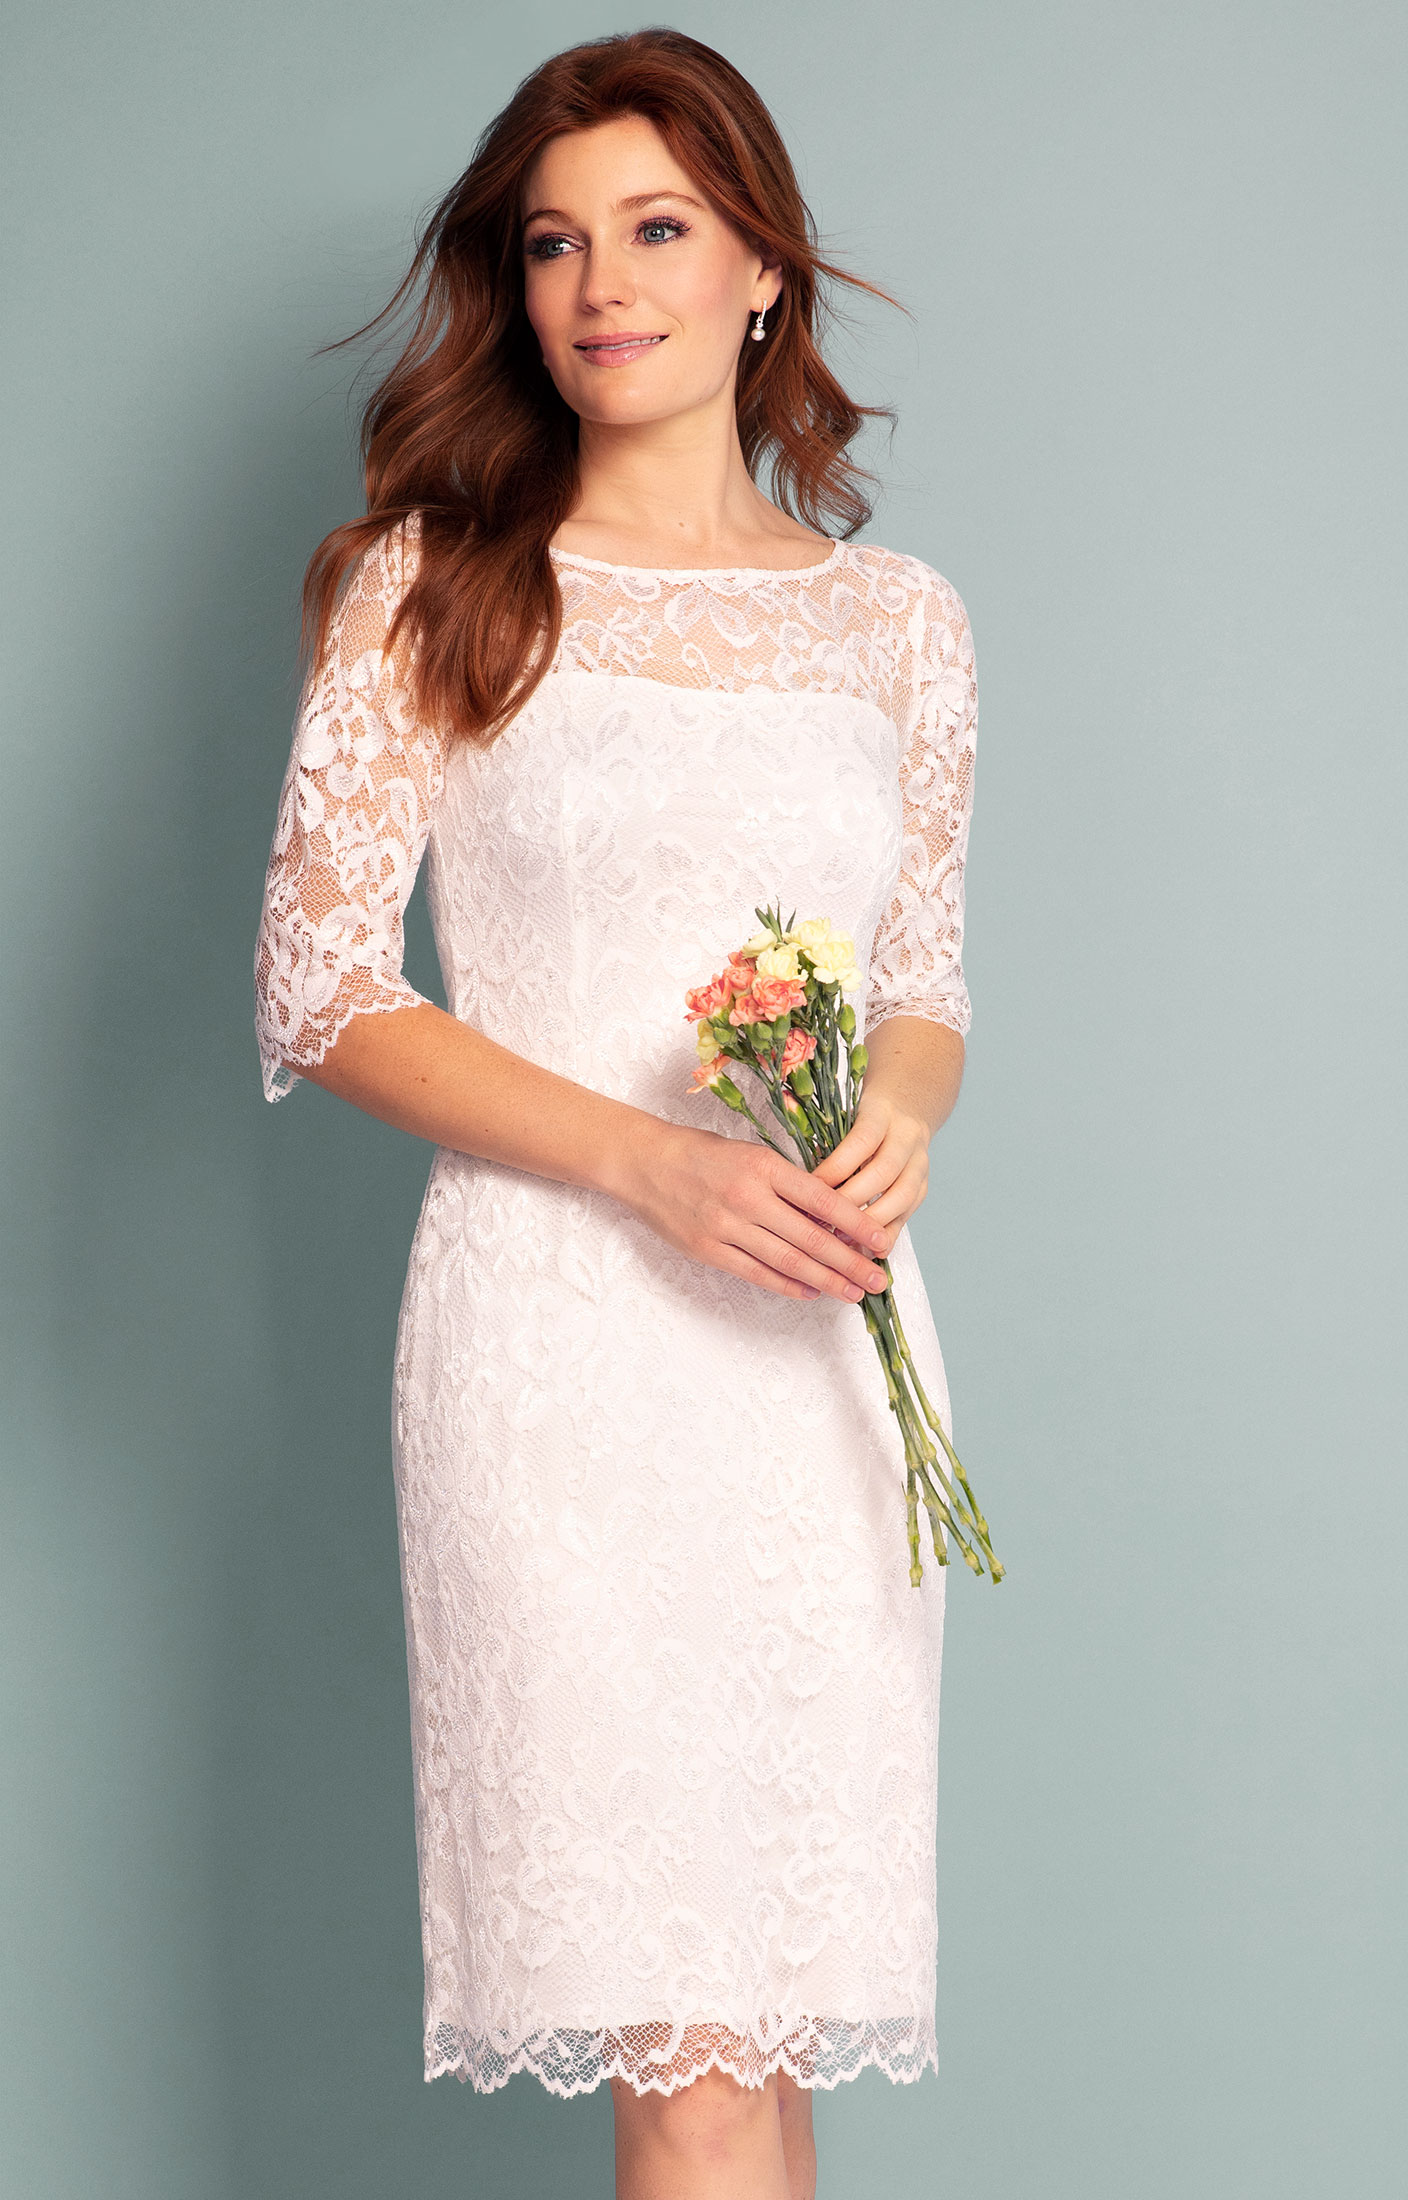 Wedding Dresses- Wedding Gowns and Bridal Wear